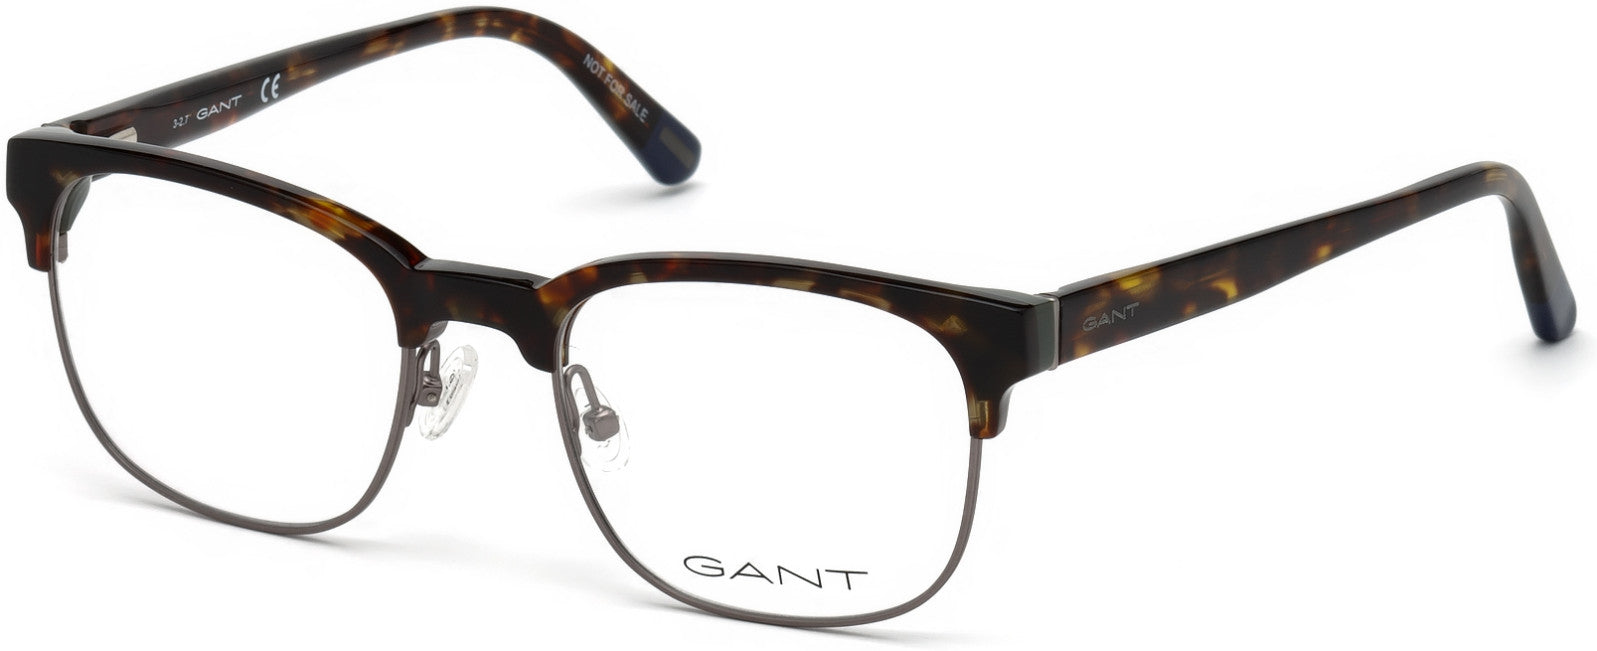 Gant GA3176 Browline Eyeglasses 052-052 - Dark Havana